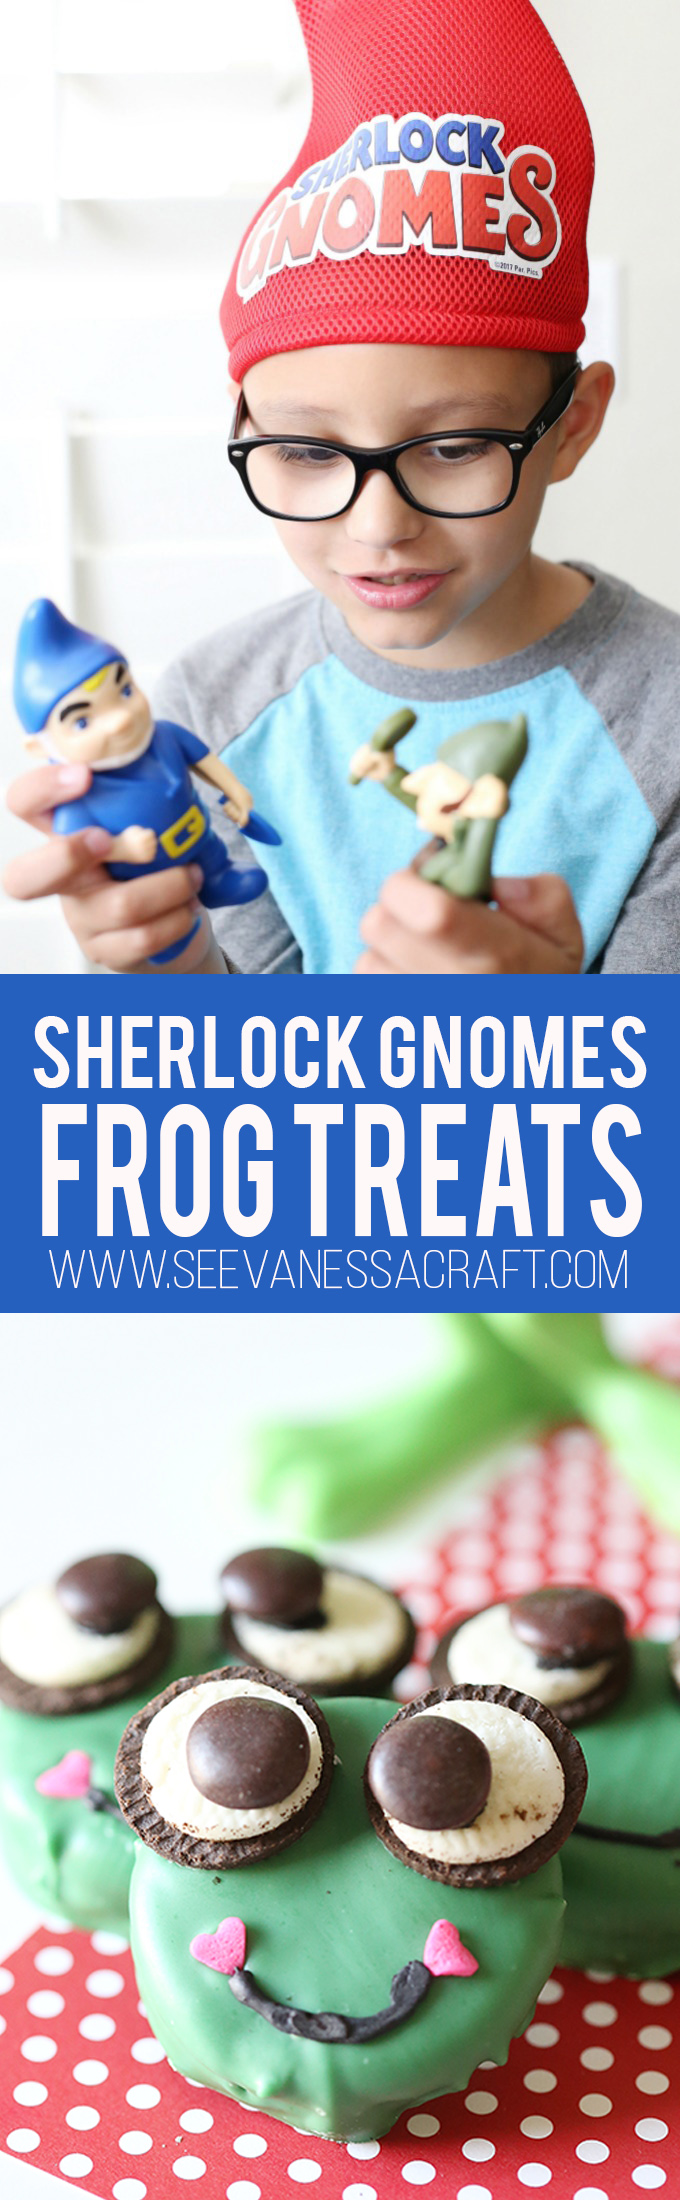 Sherlock-Gnomes-Oreo-Frog-Treat-Idea-for-Kids-and Parties